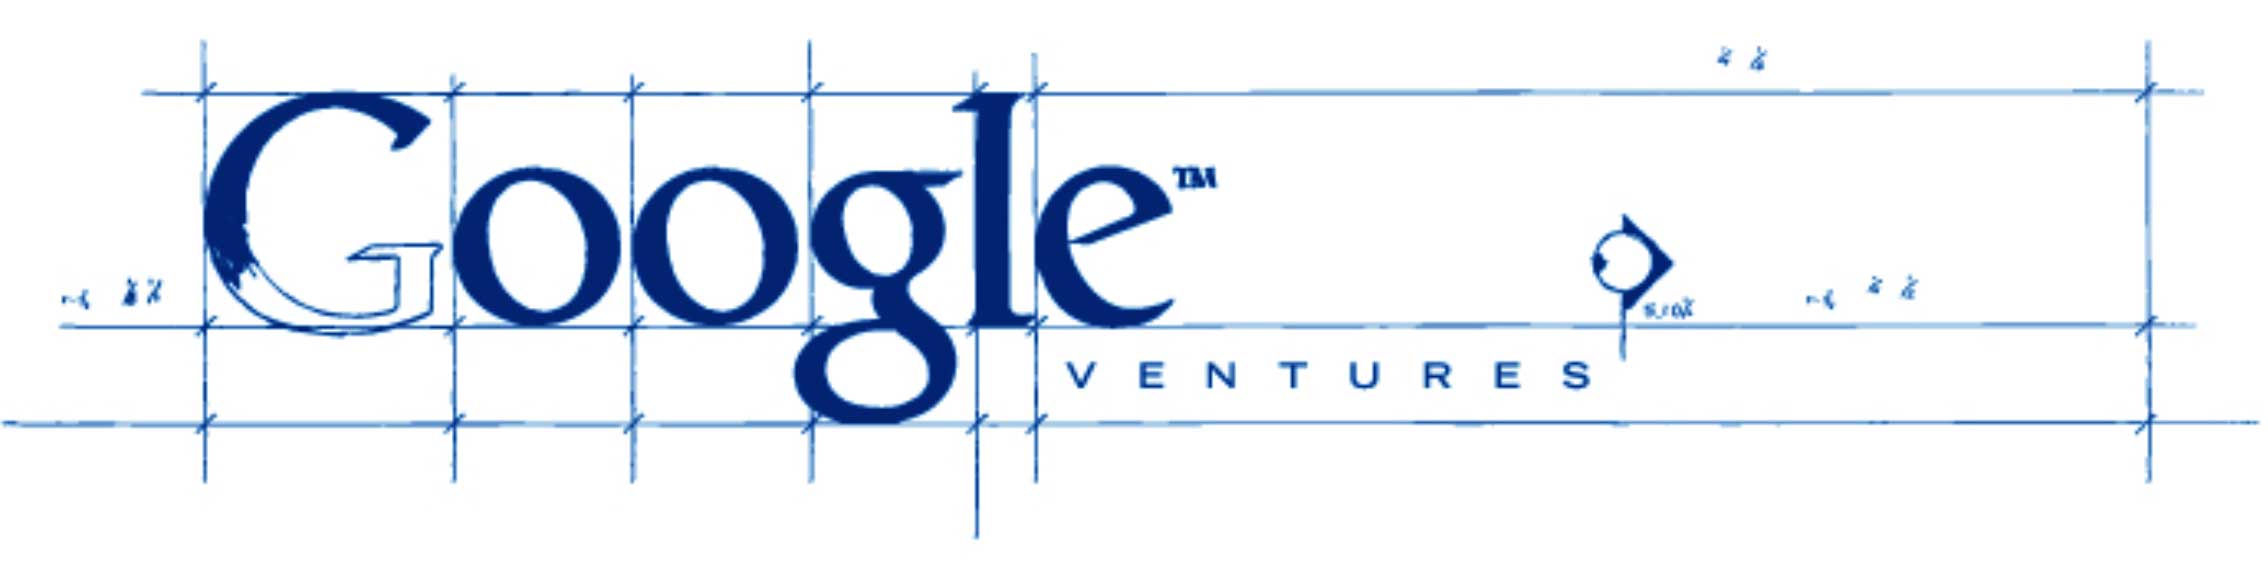 Google Ventures Logo - GV